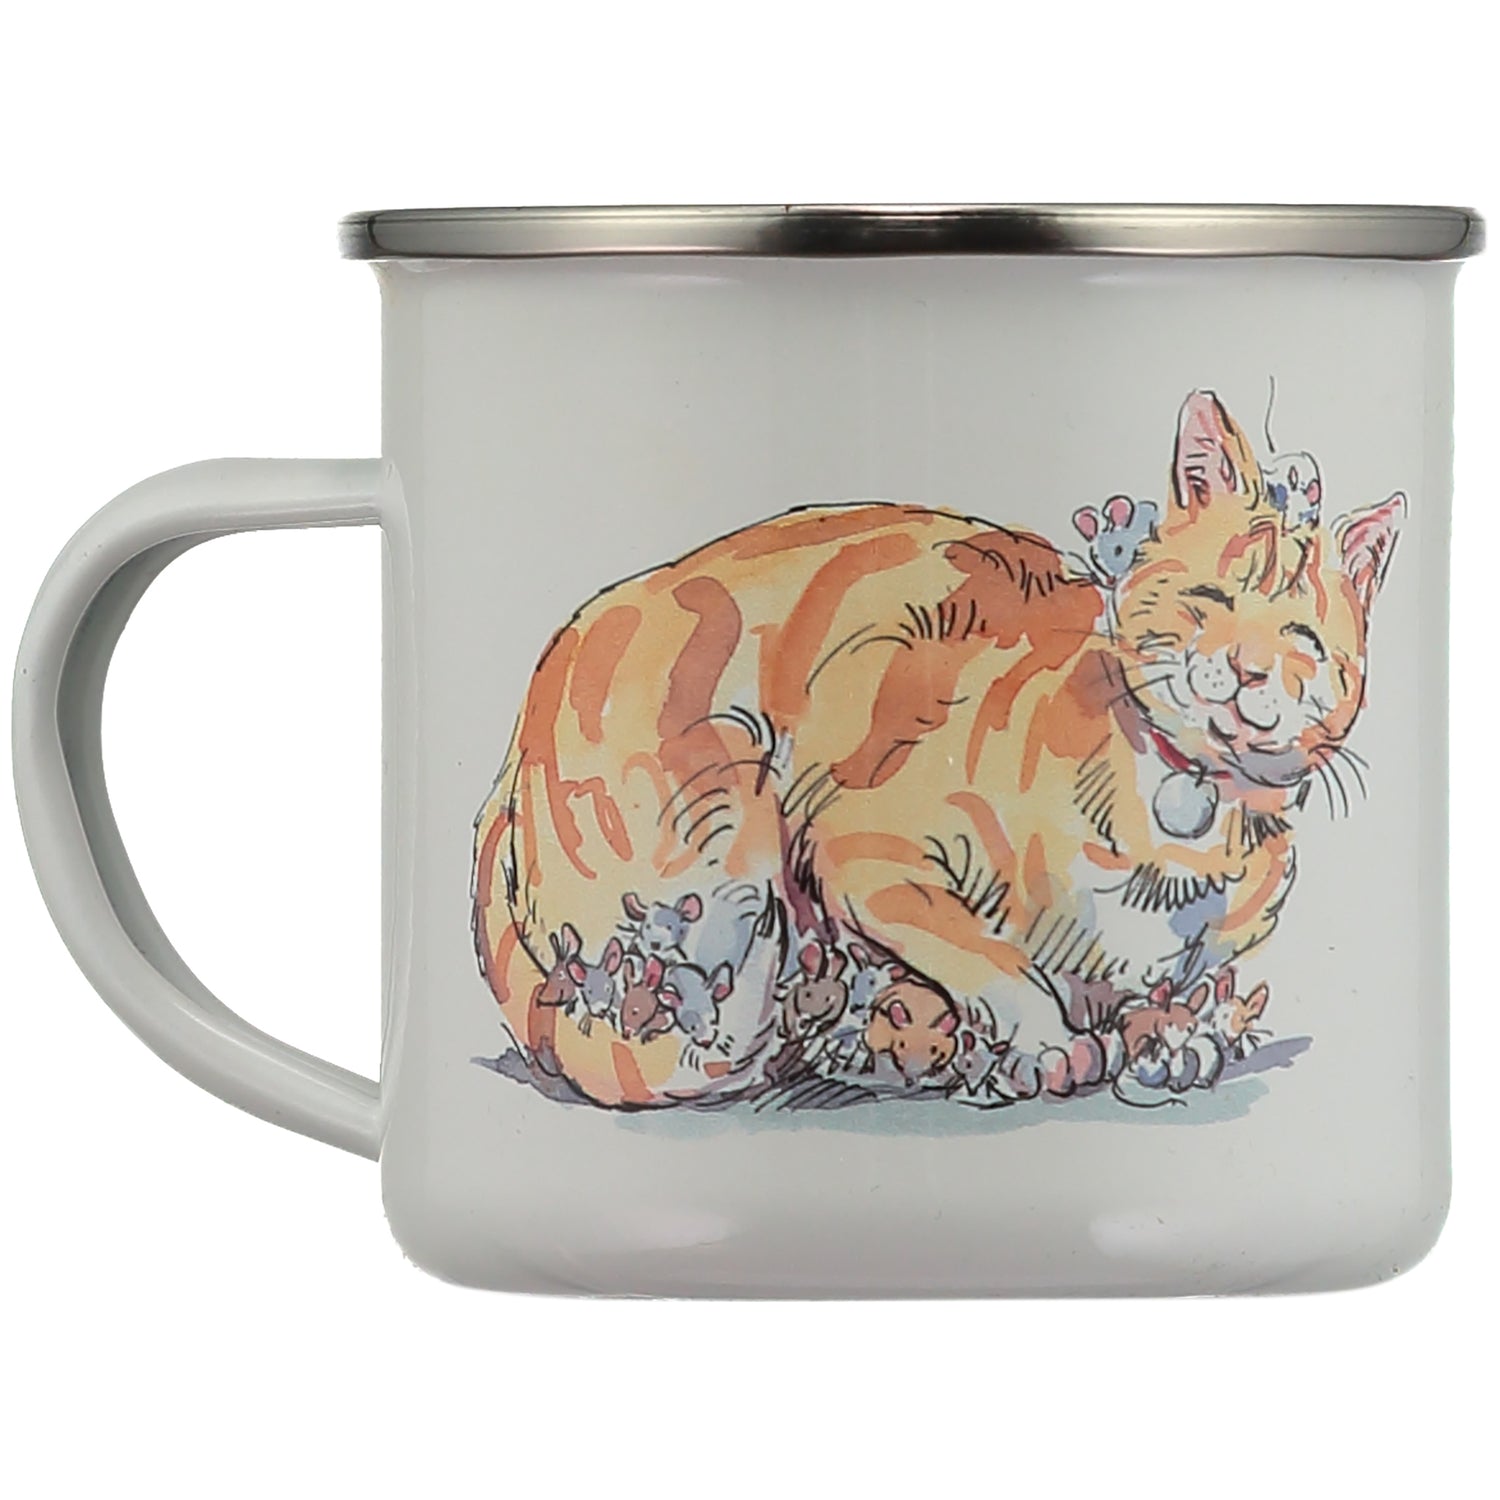 Tibs The Post Office Cat Enamel Mug